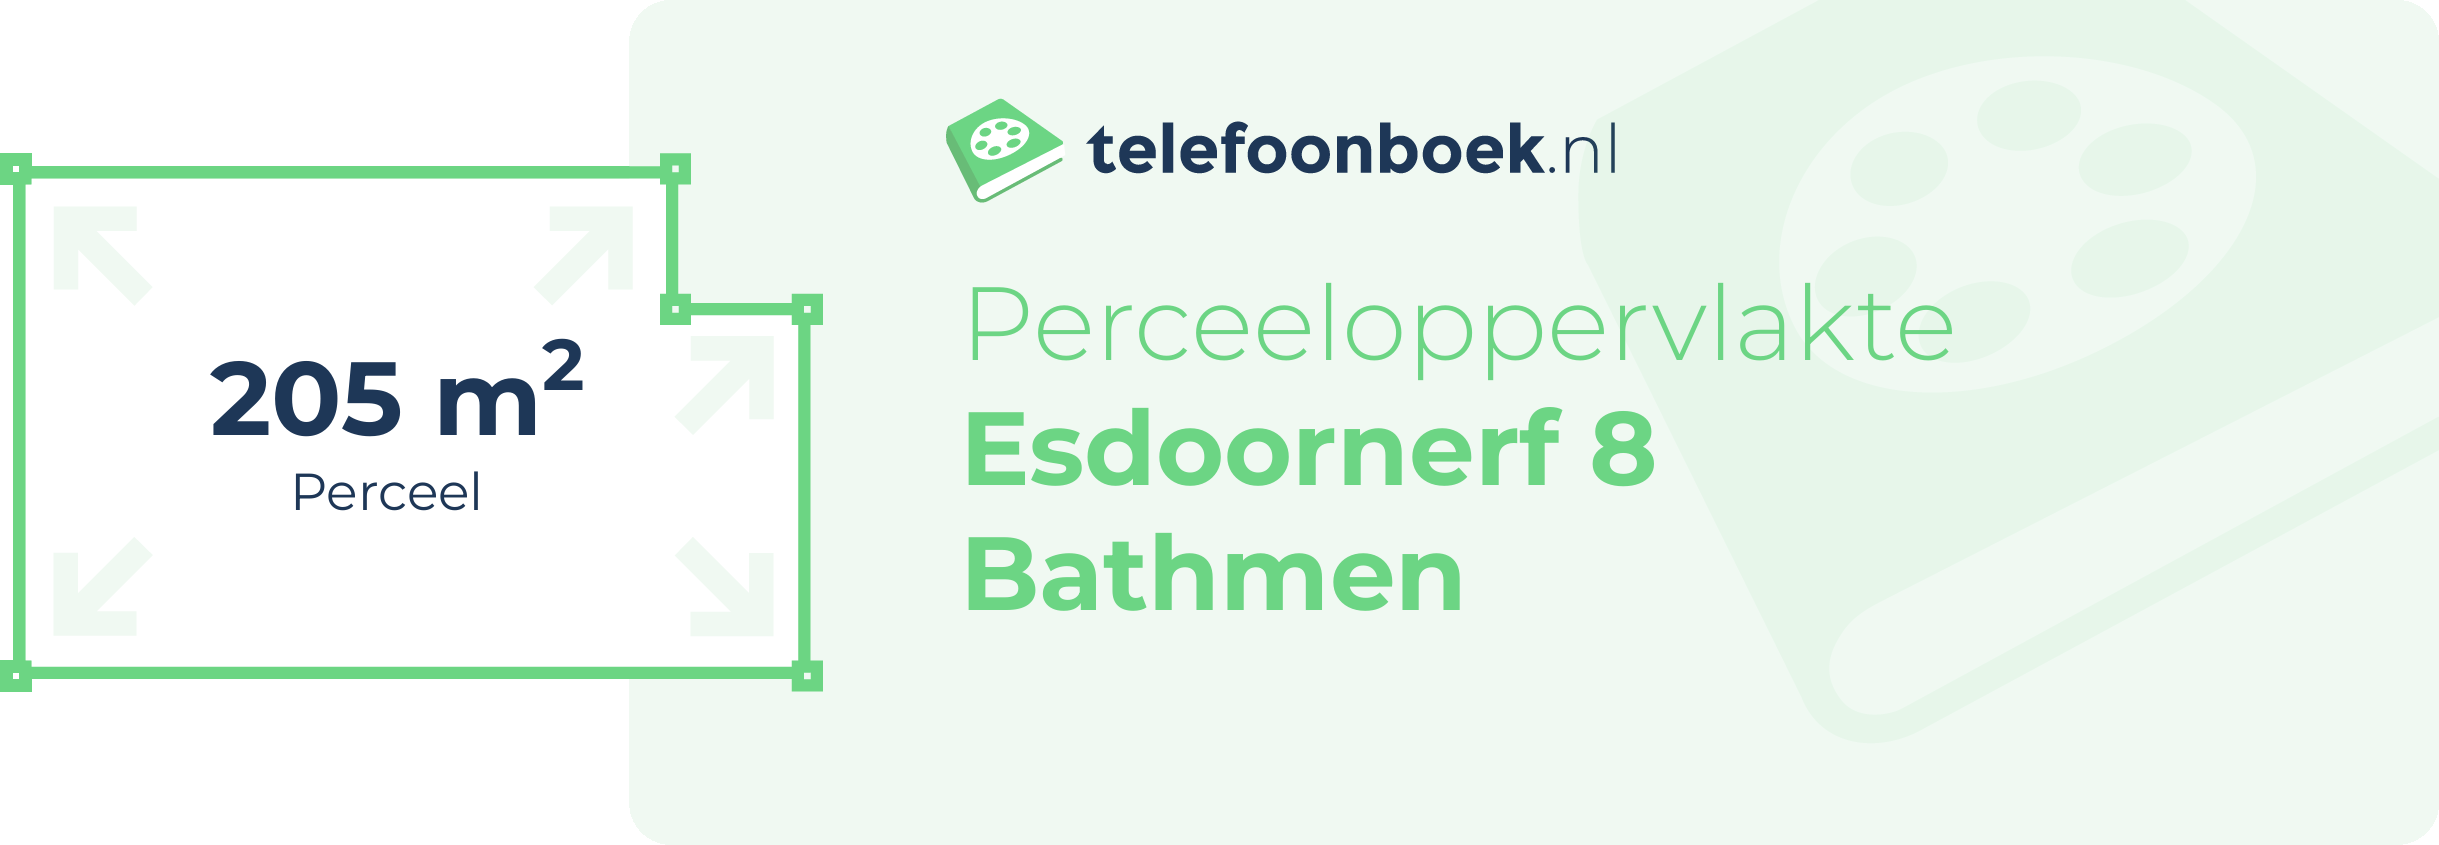 Perceeloppervlakte Esdoornerf 8 Bathmen